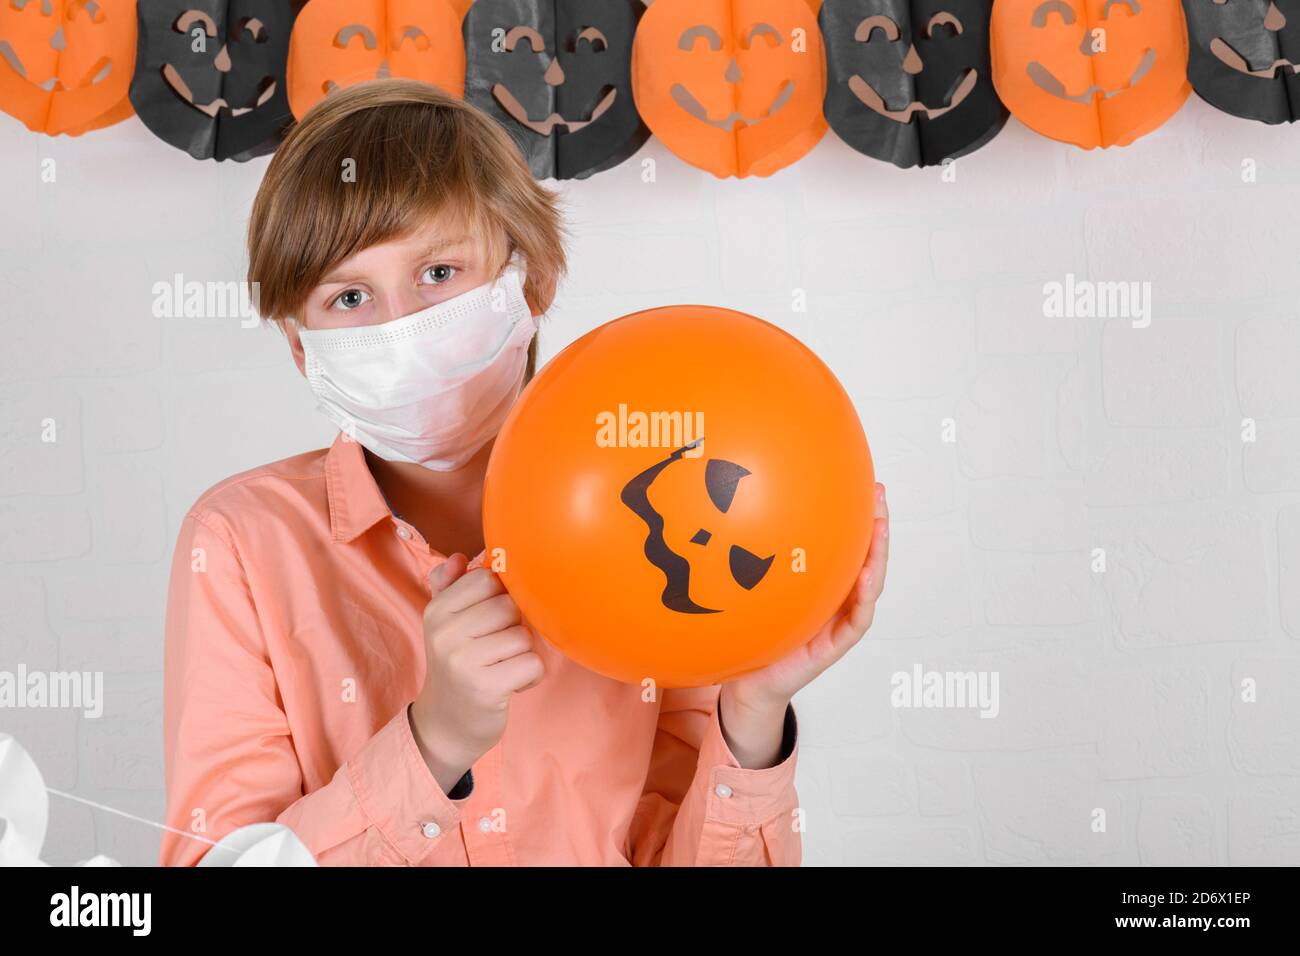 A blond boy in protective medical mask looking at orange balloon, Happy Halloween on quarantine coronavirus pandemic Stock Photo